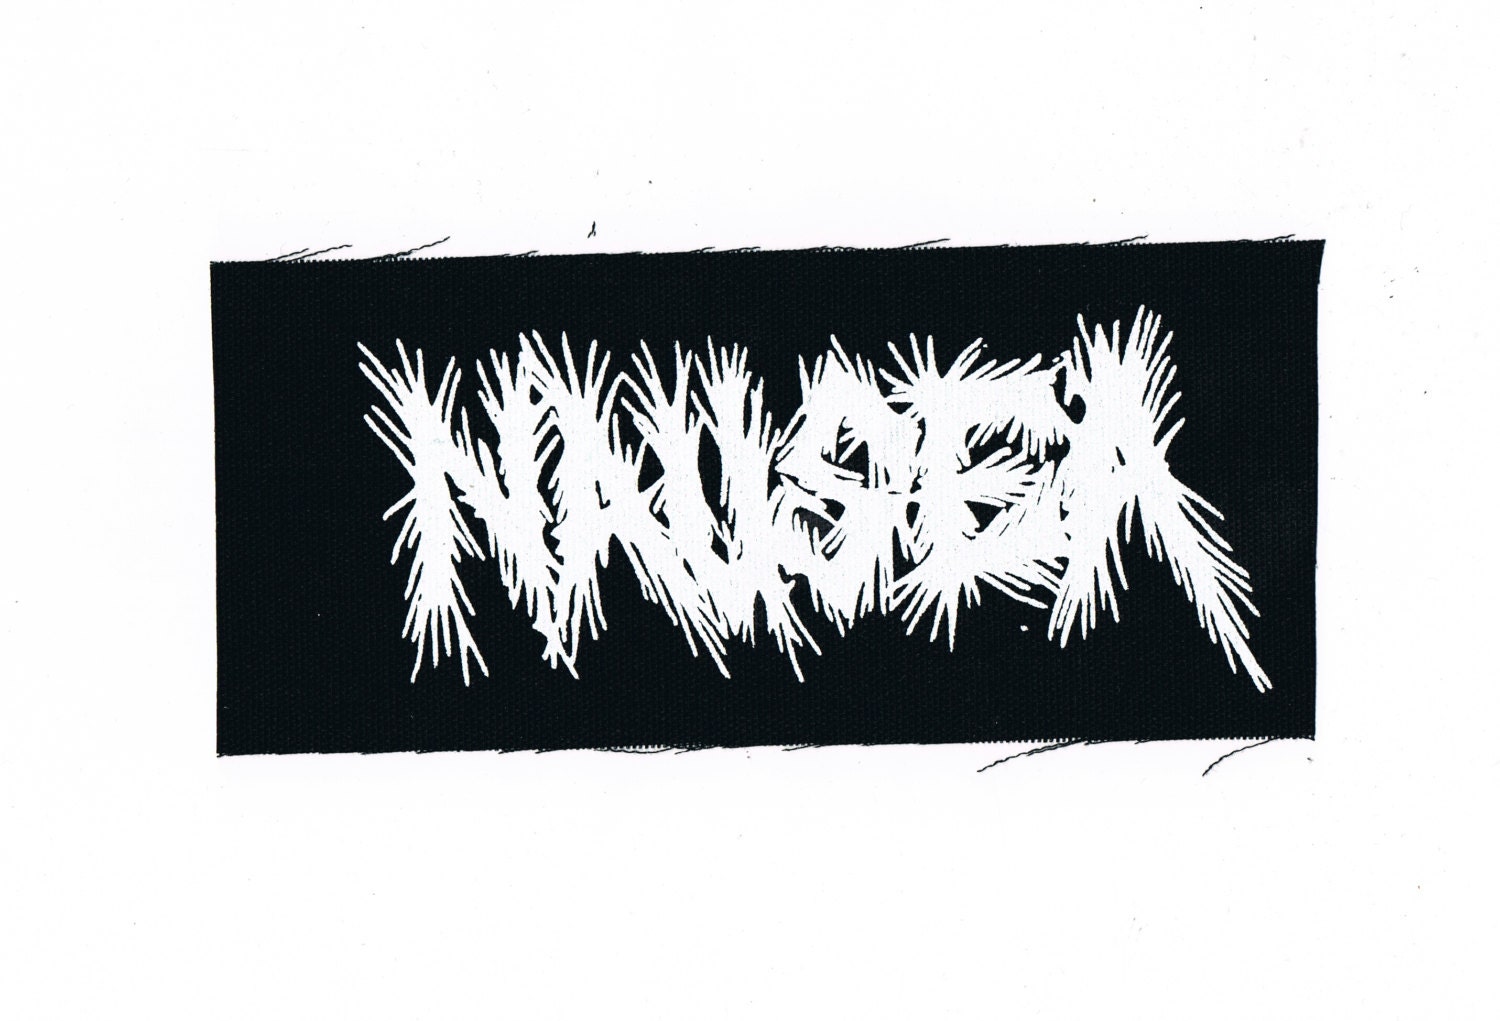 Nausea Band Logo Patch Crust Punk Thrash Metal Patches